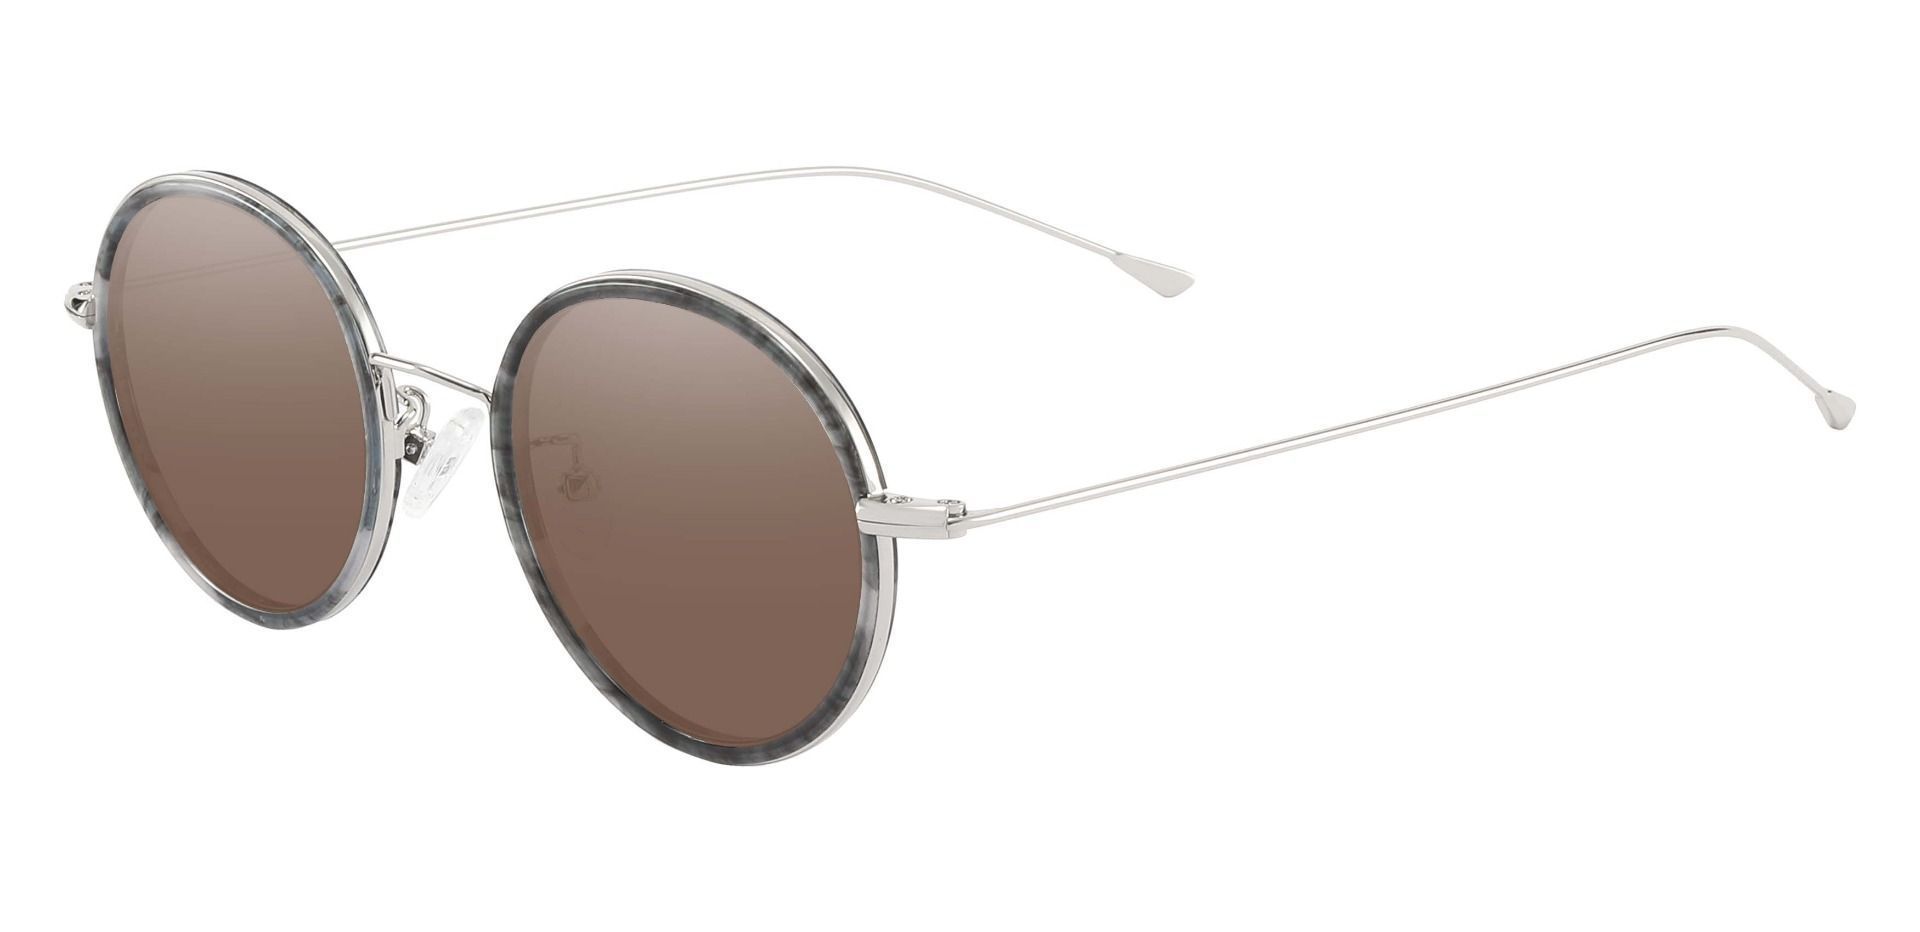 Malverne Oval Prescription Sunglasses - Gray Frame With Brown Lenses